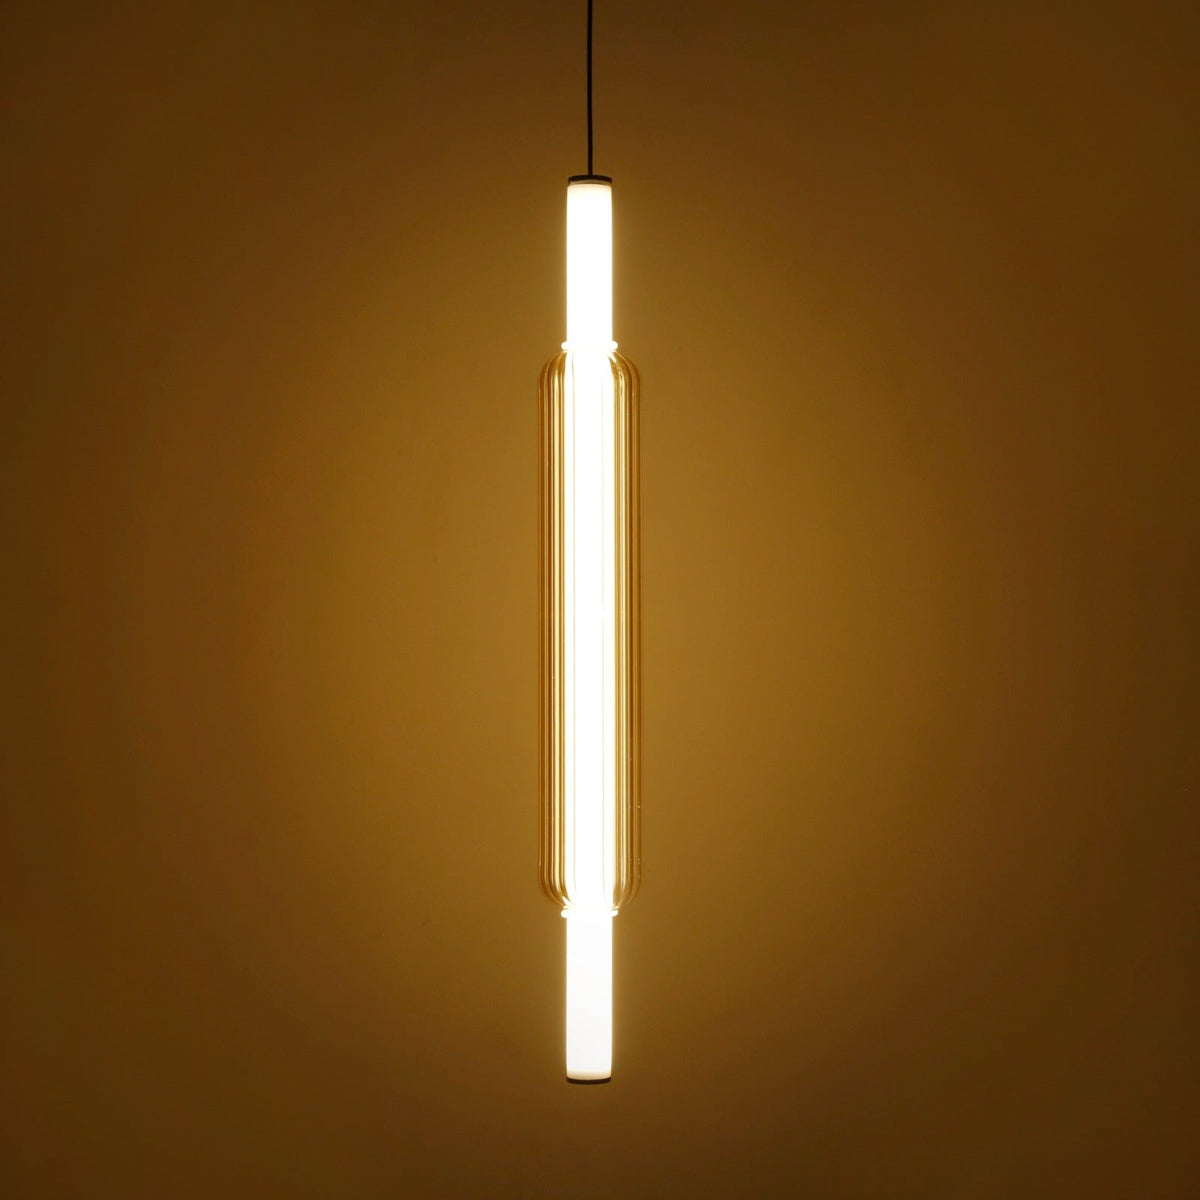 Buy Piping Hot Amber LED Pendant Light Corner